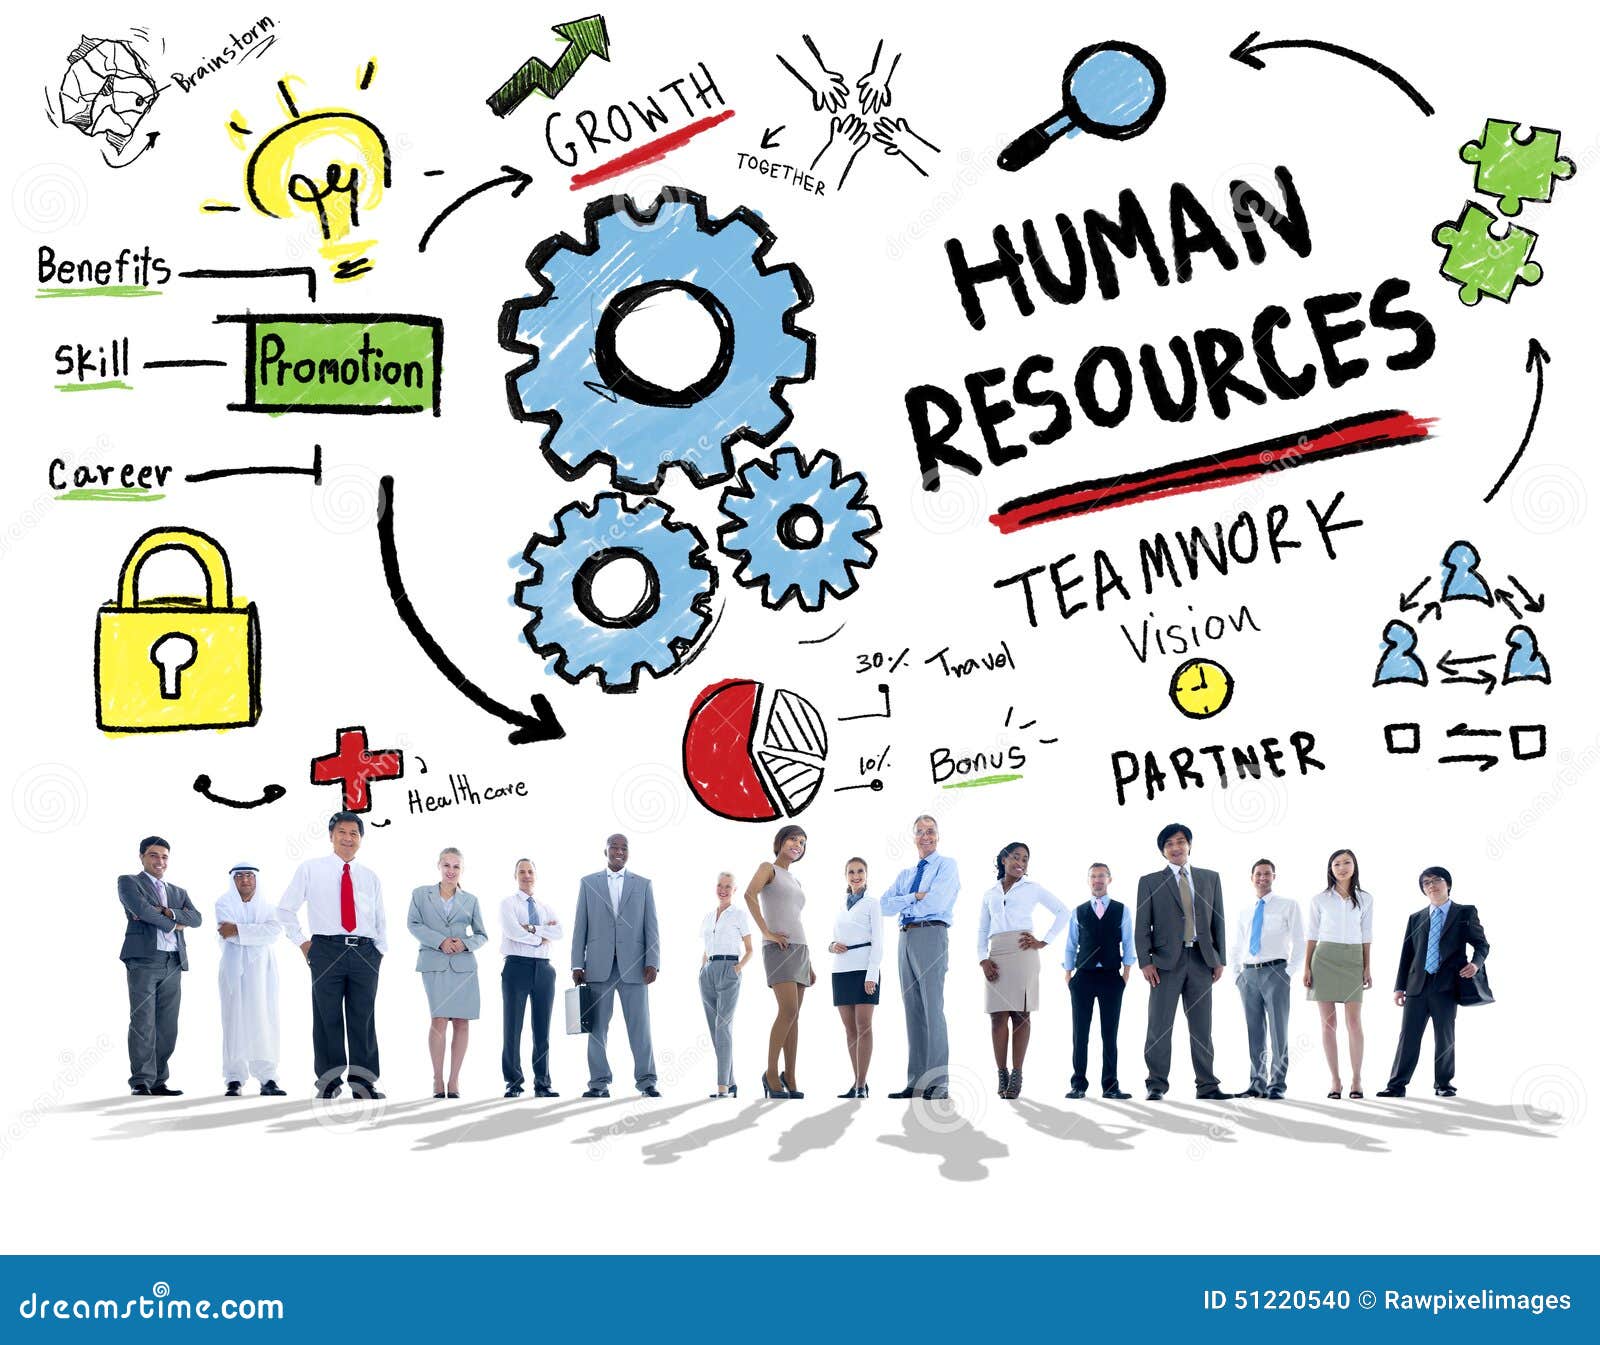 Human Resources Employment Teamwork Corporate Business